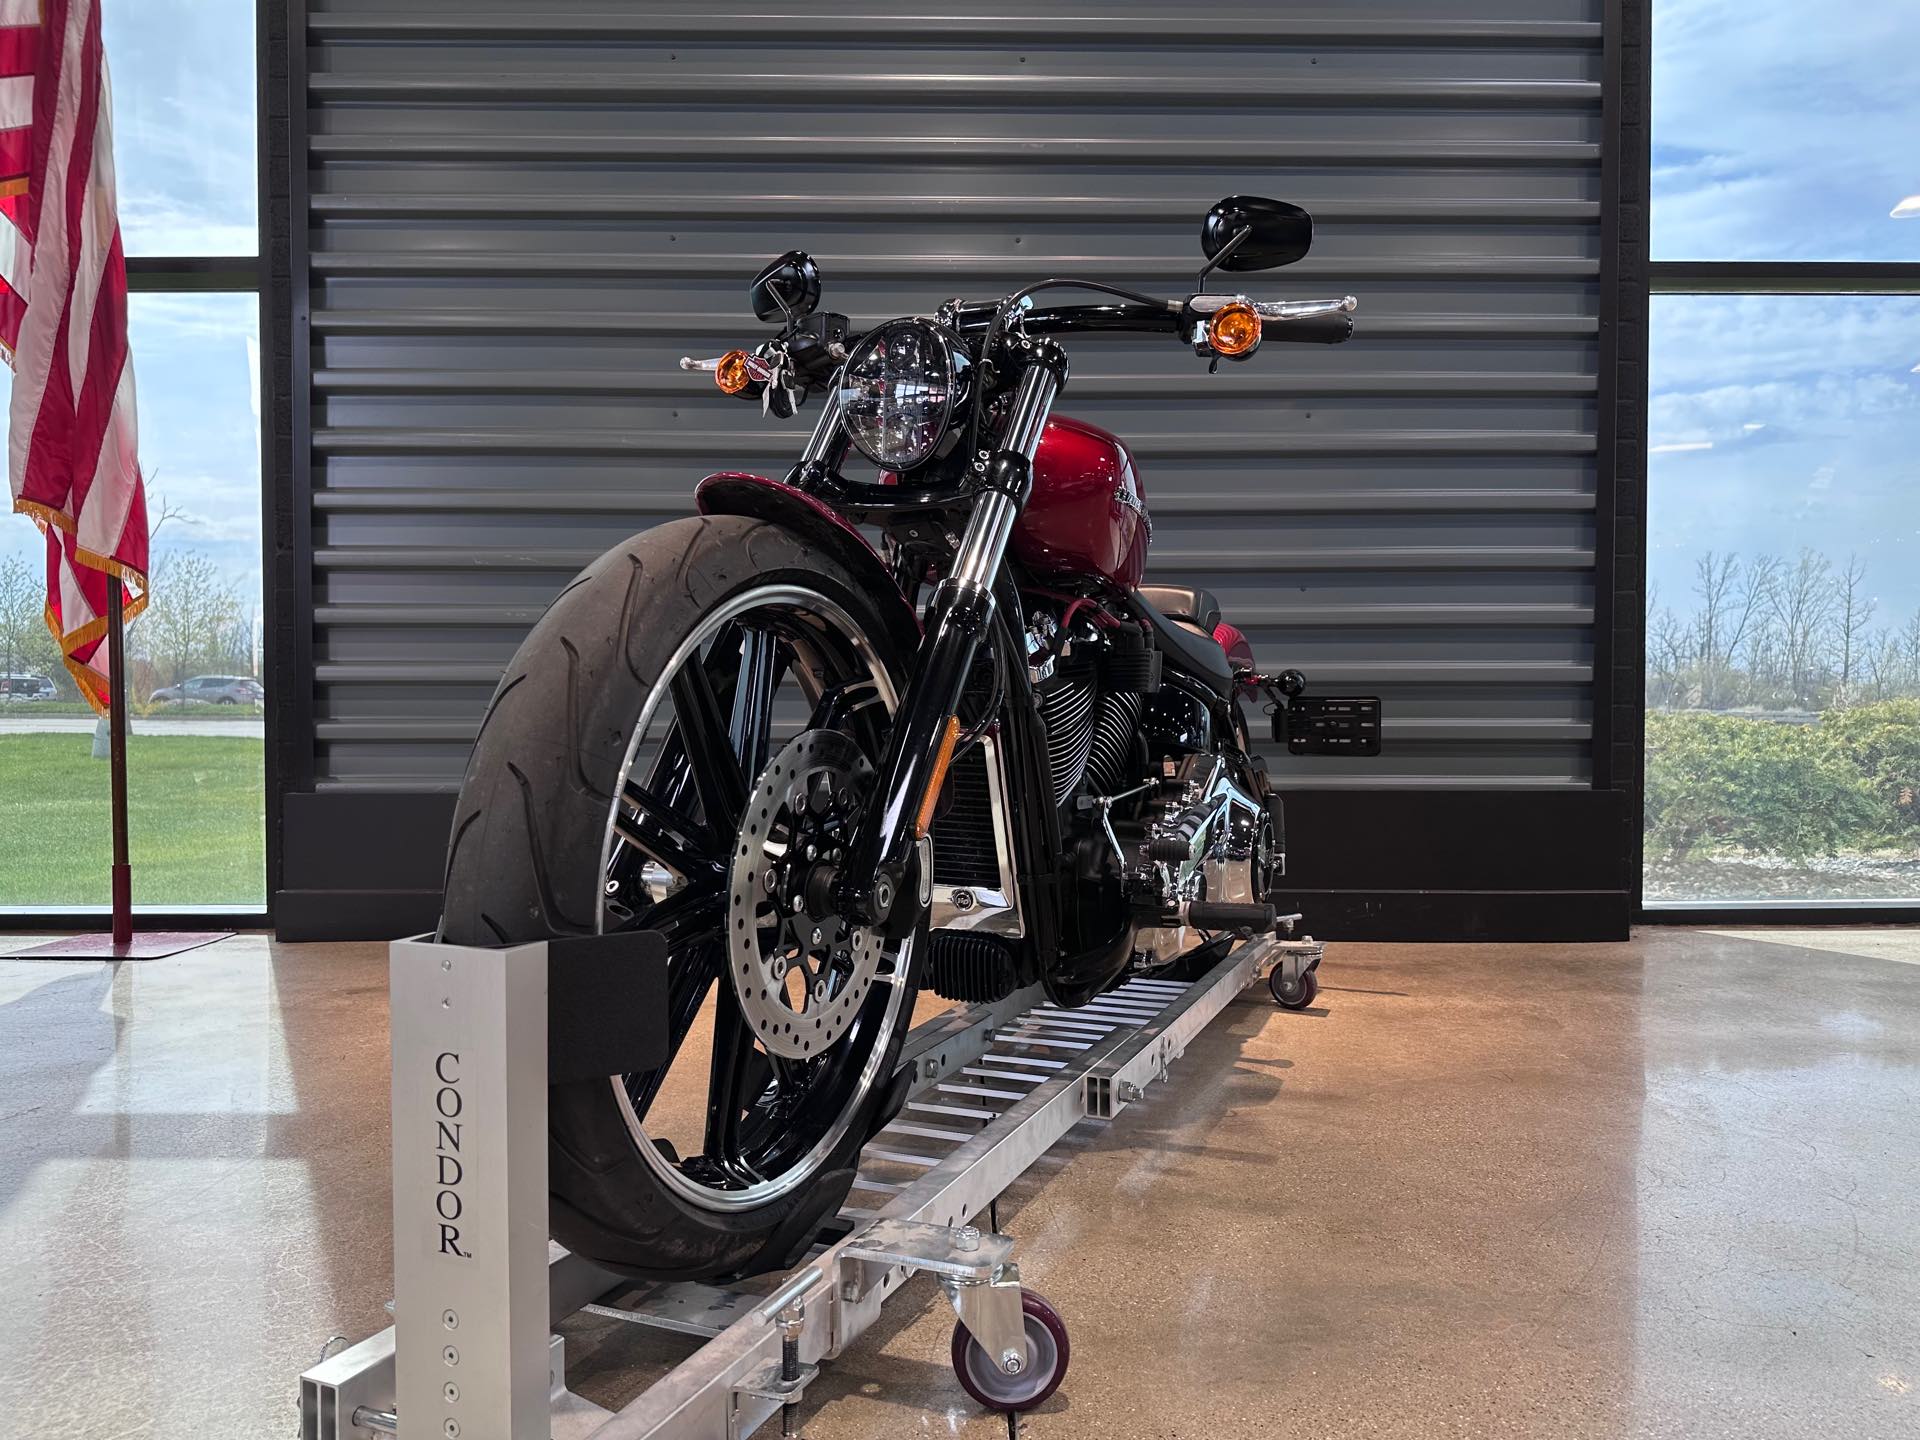 2019 Harley-Davidson Softail Breakout 114 at Chi-Town Harley-Davidson